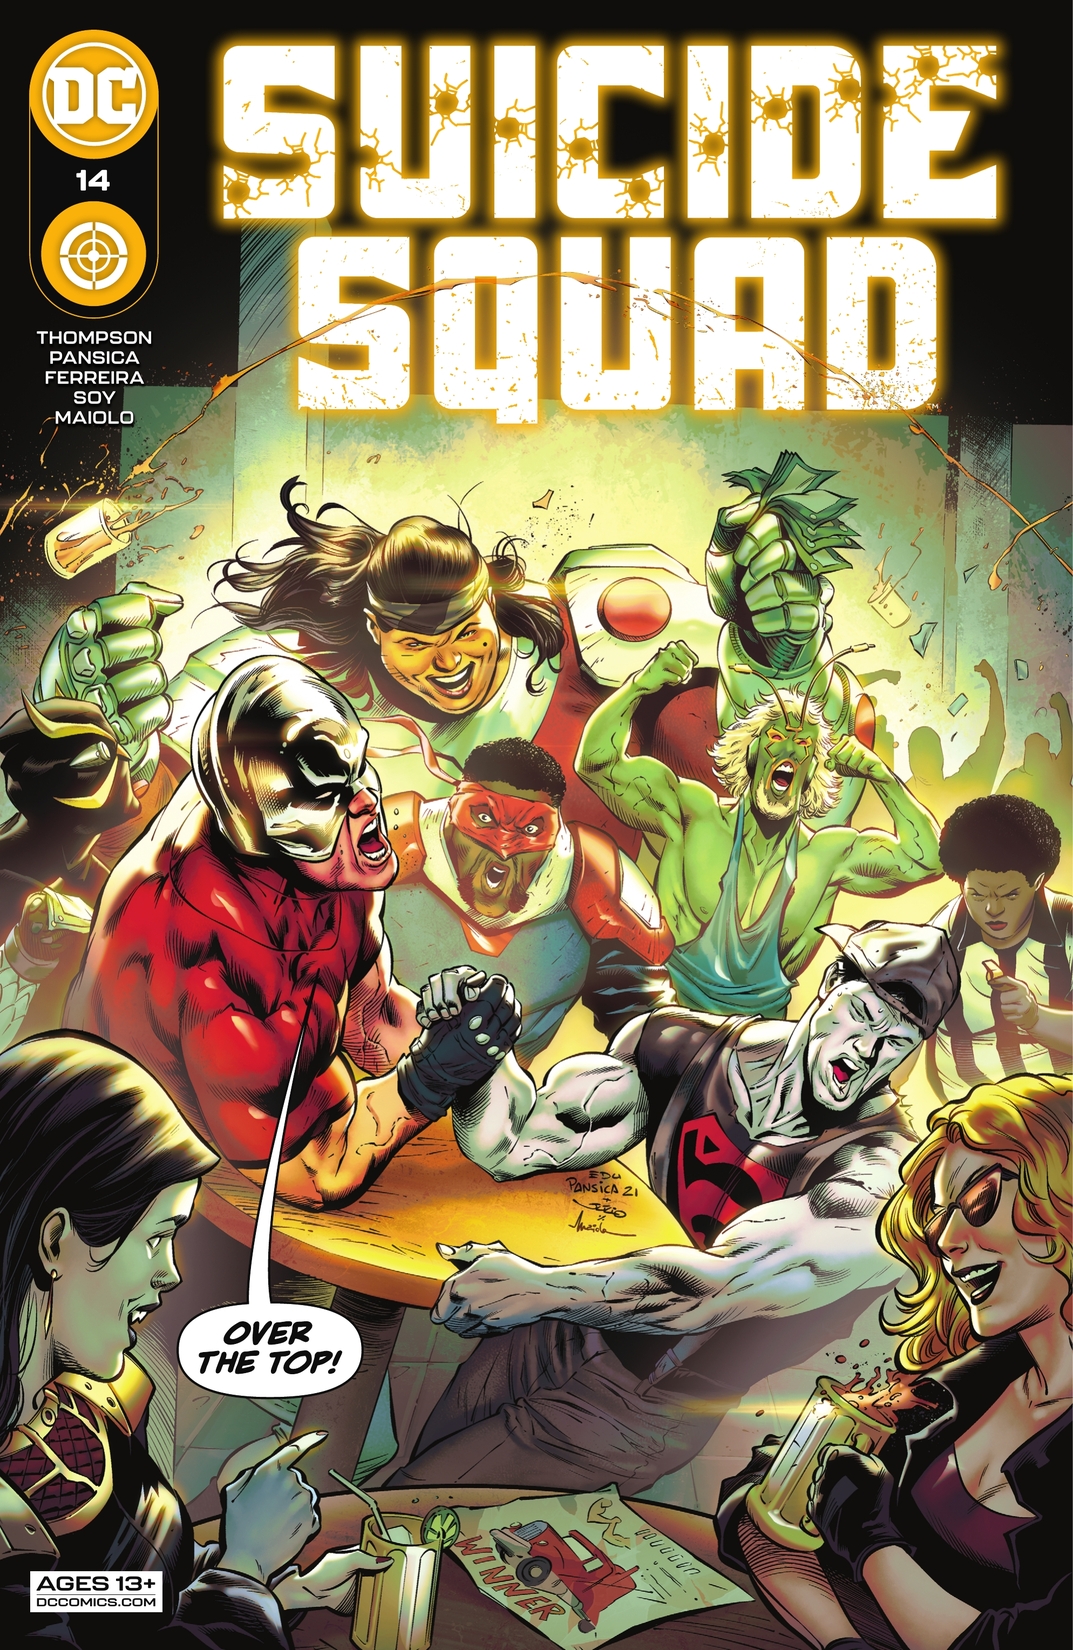 Suicide Squad #14 preview images